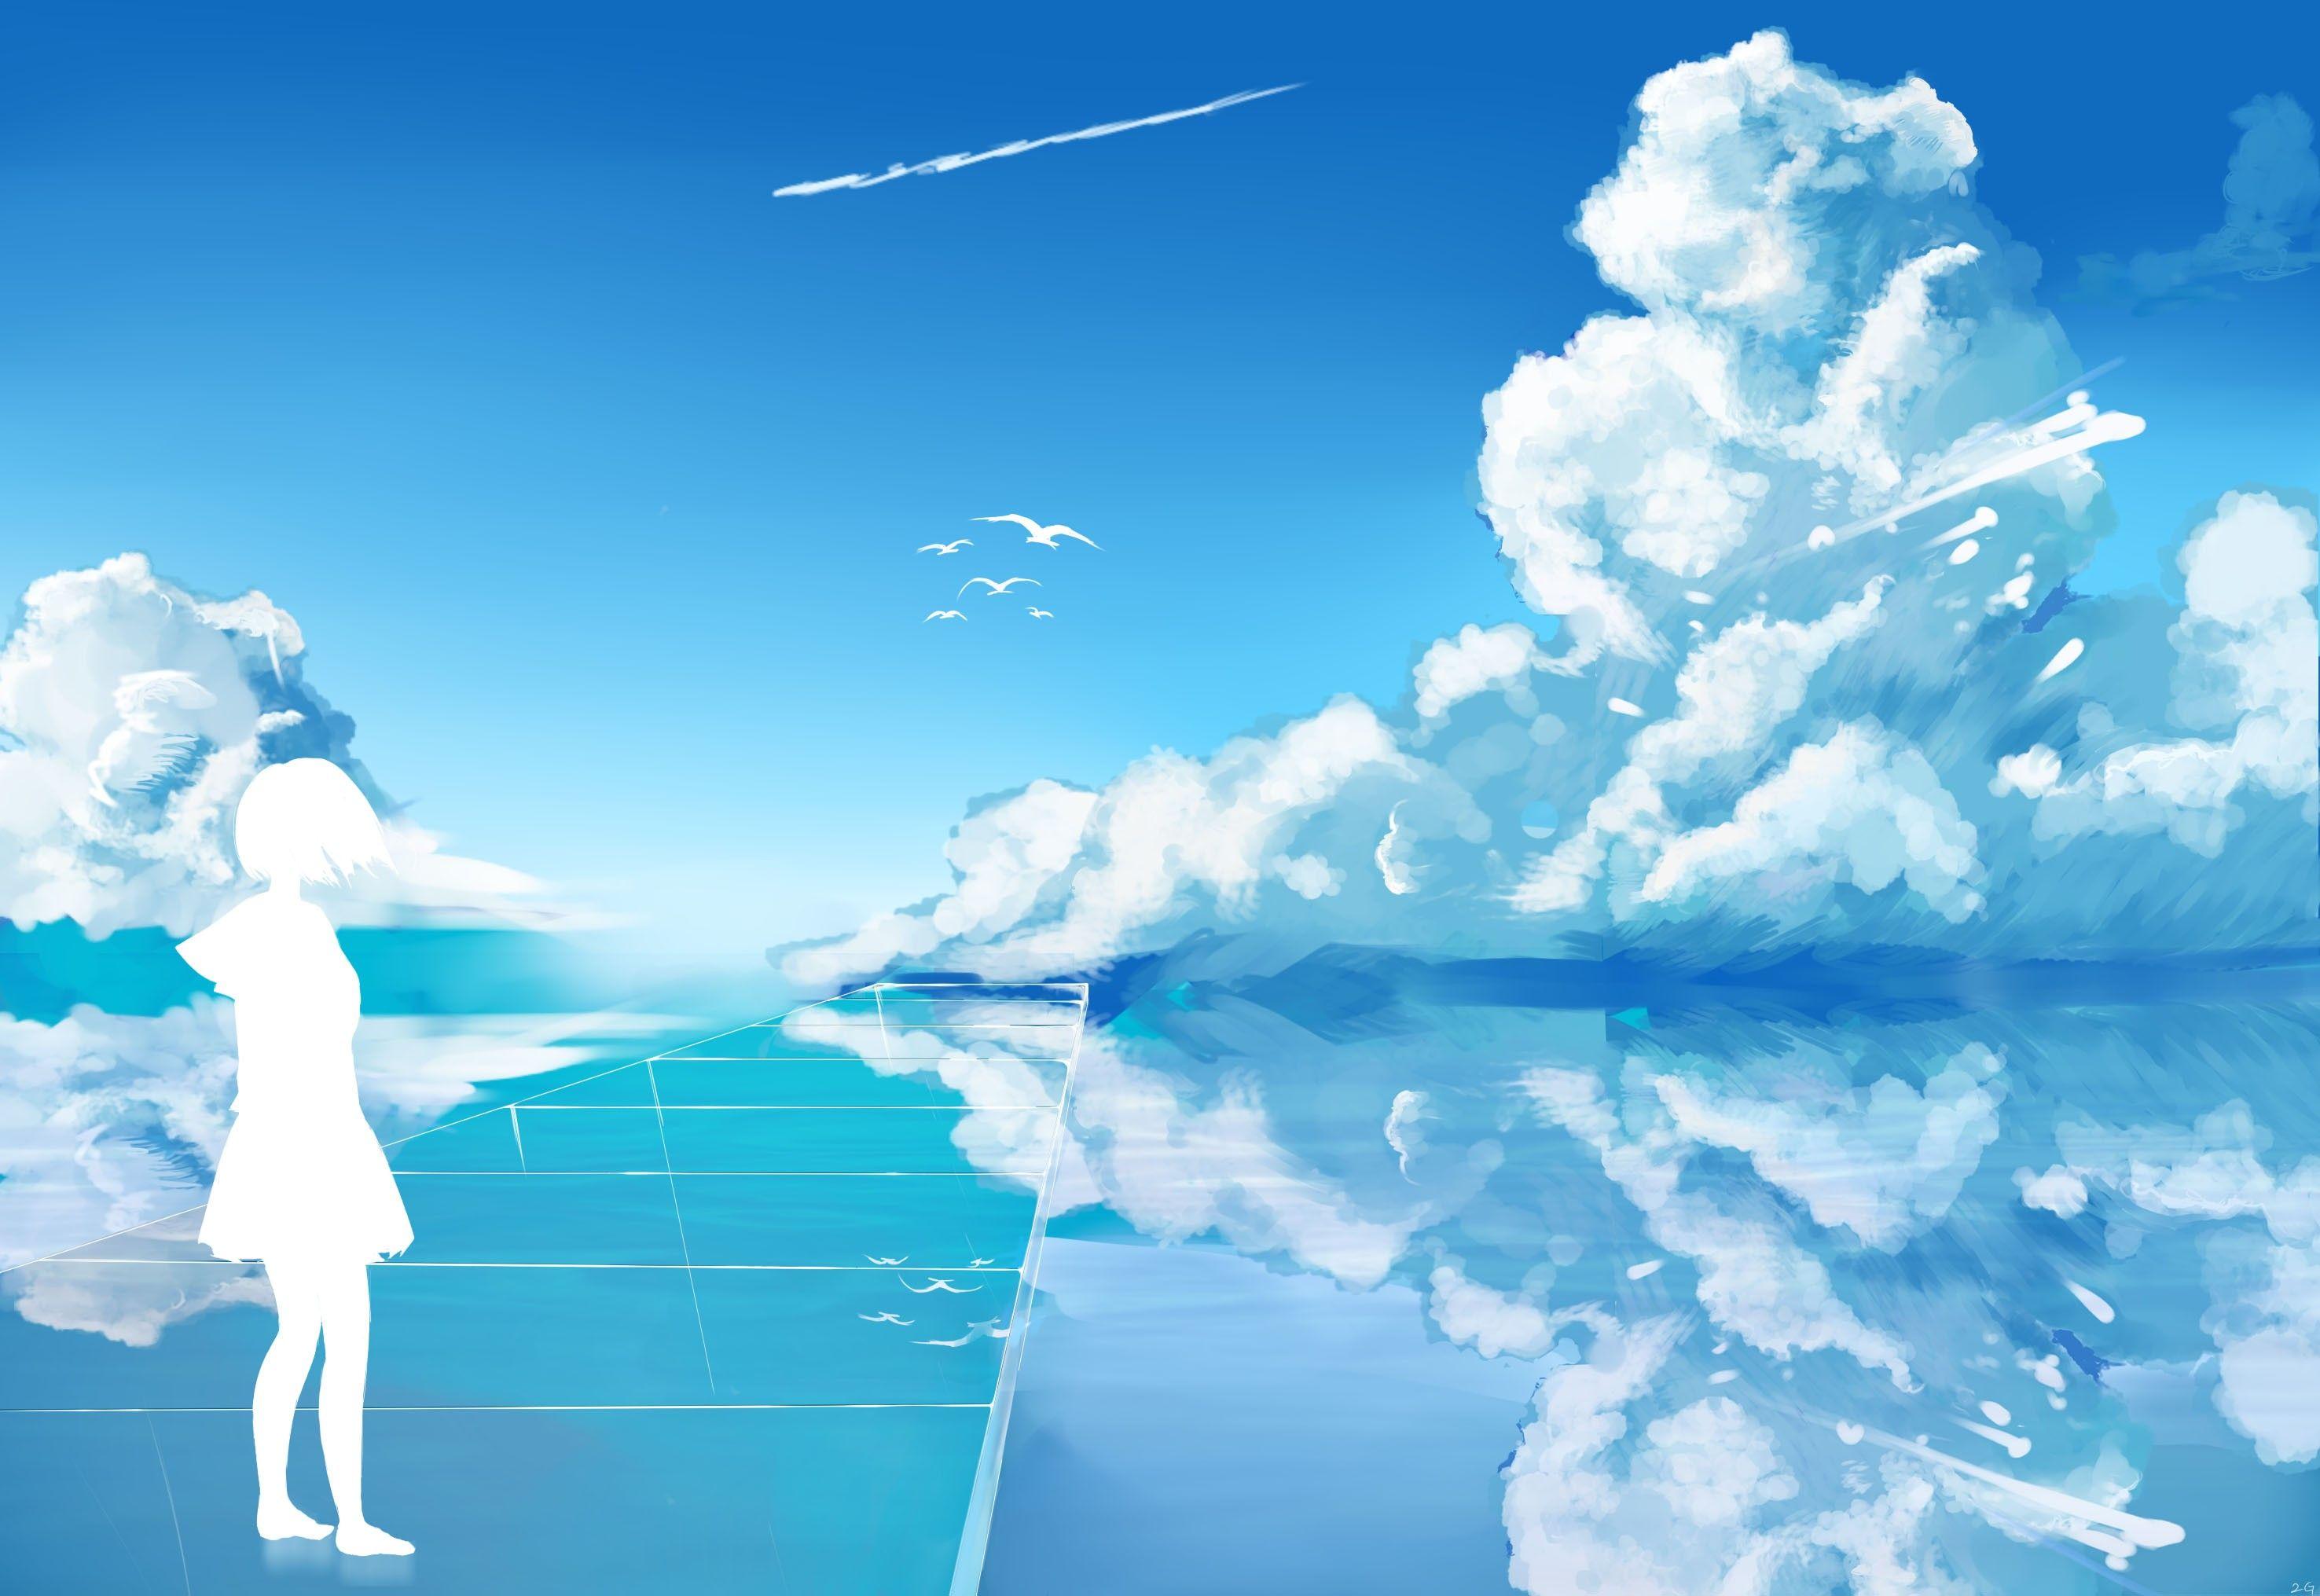 2952x2031 Blue Sky And Girl Anime Scenery hình nền